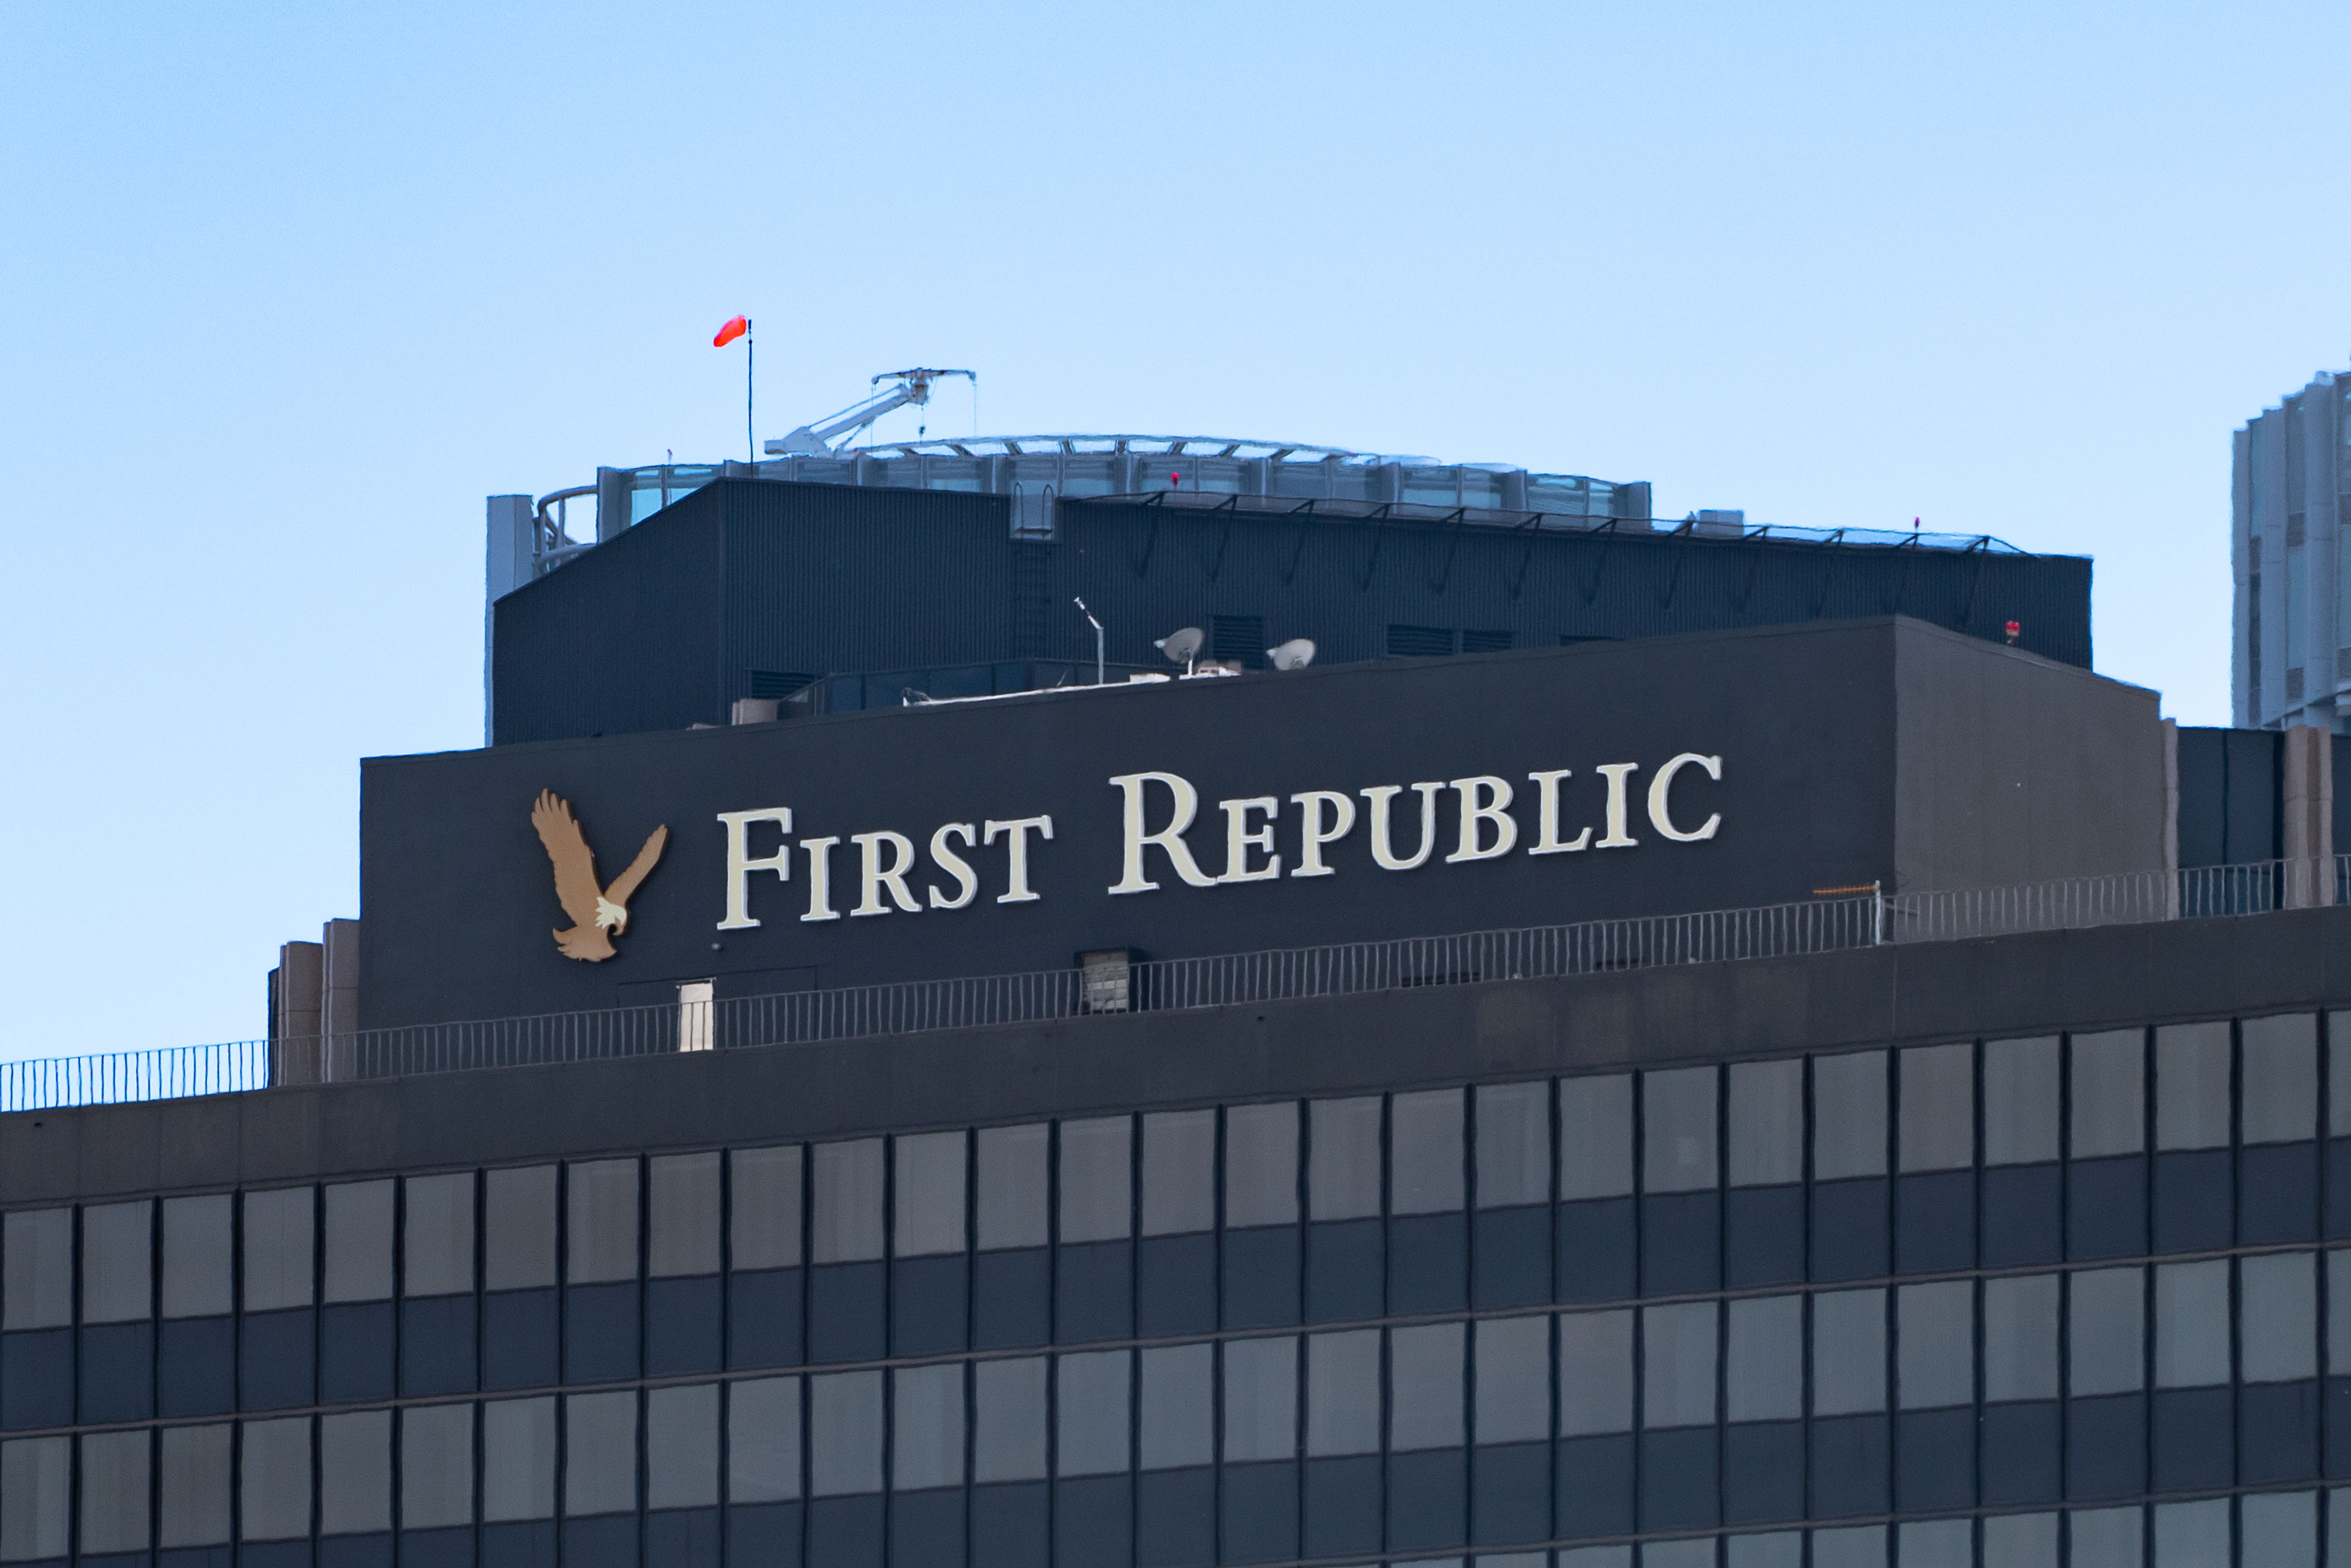 A First Republican bank building